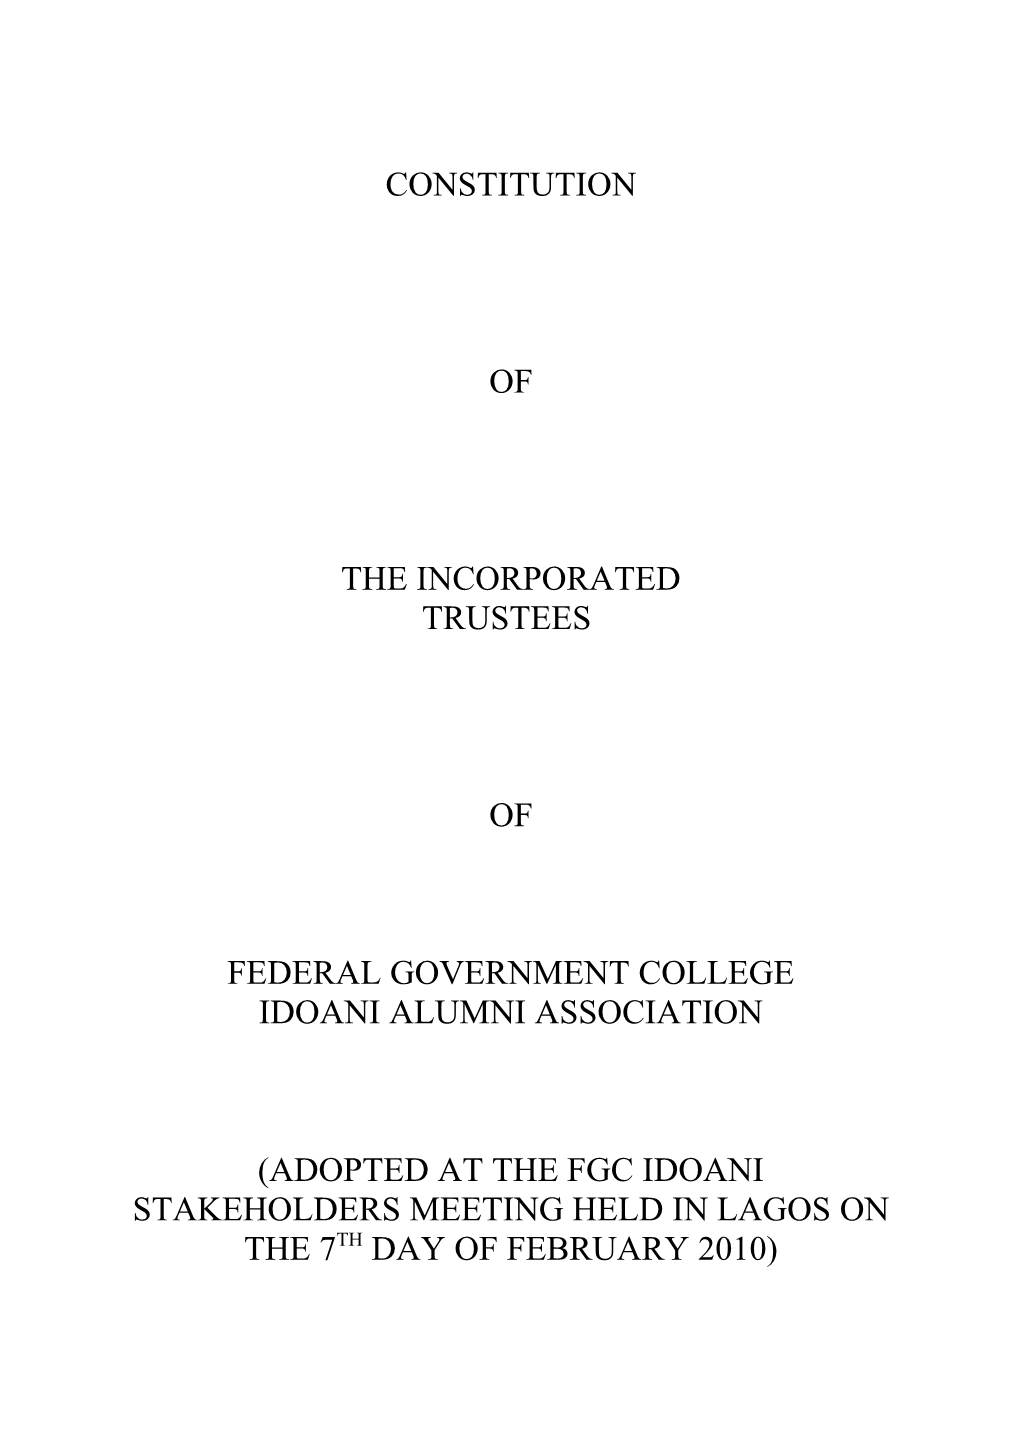 Constitution of the Incorporated Trustees of Federalgovernmentcollege, Idoani Alumni